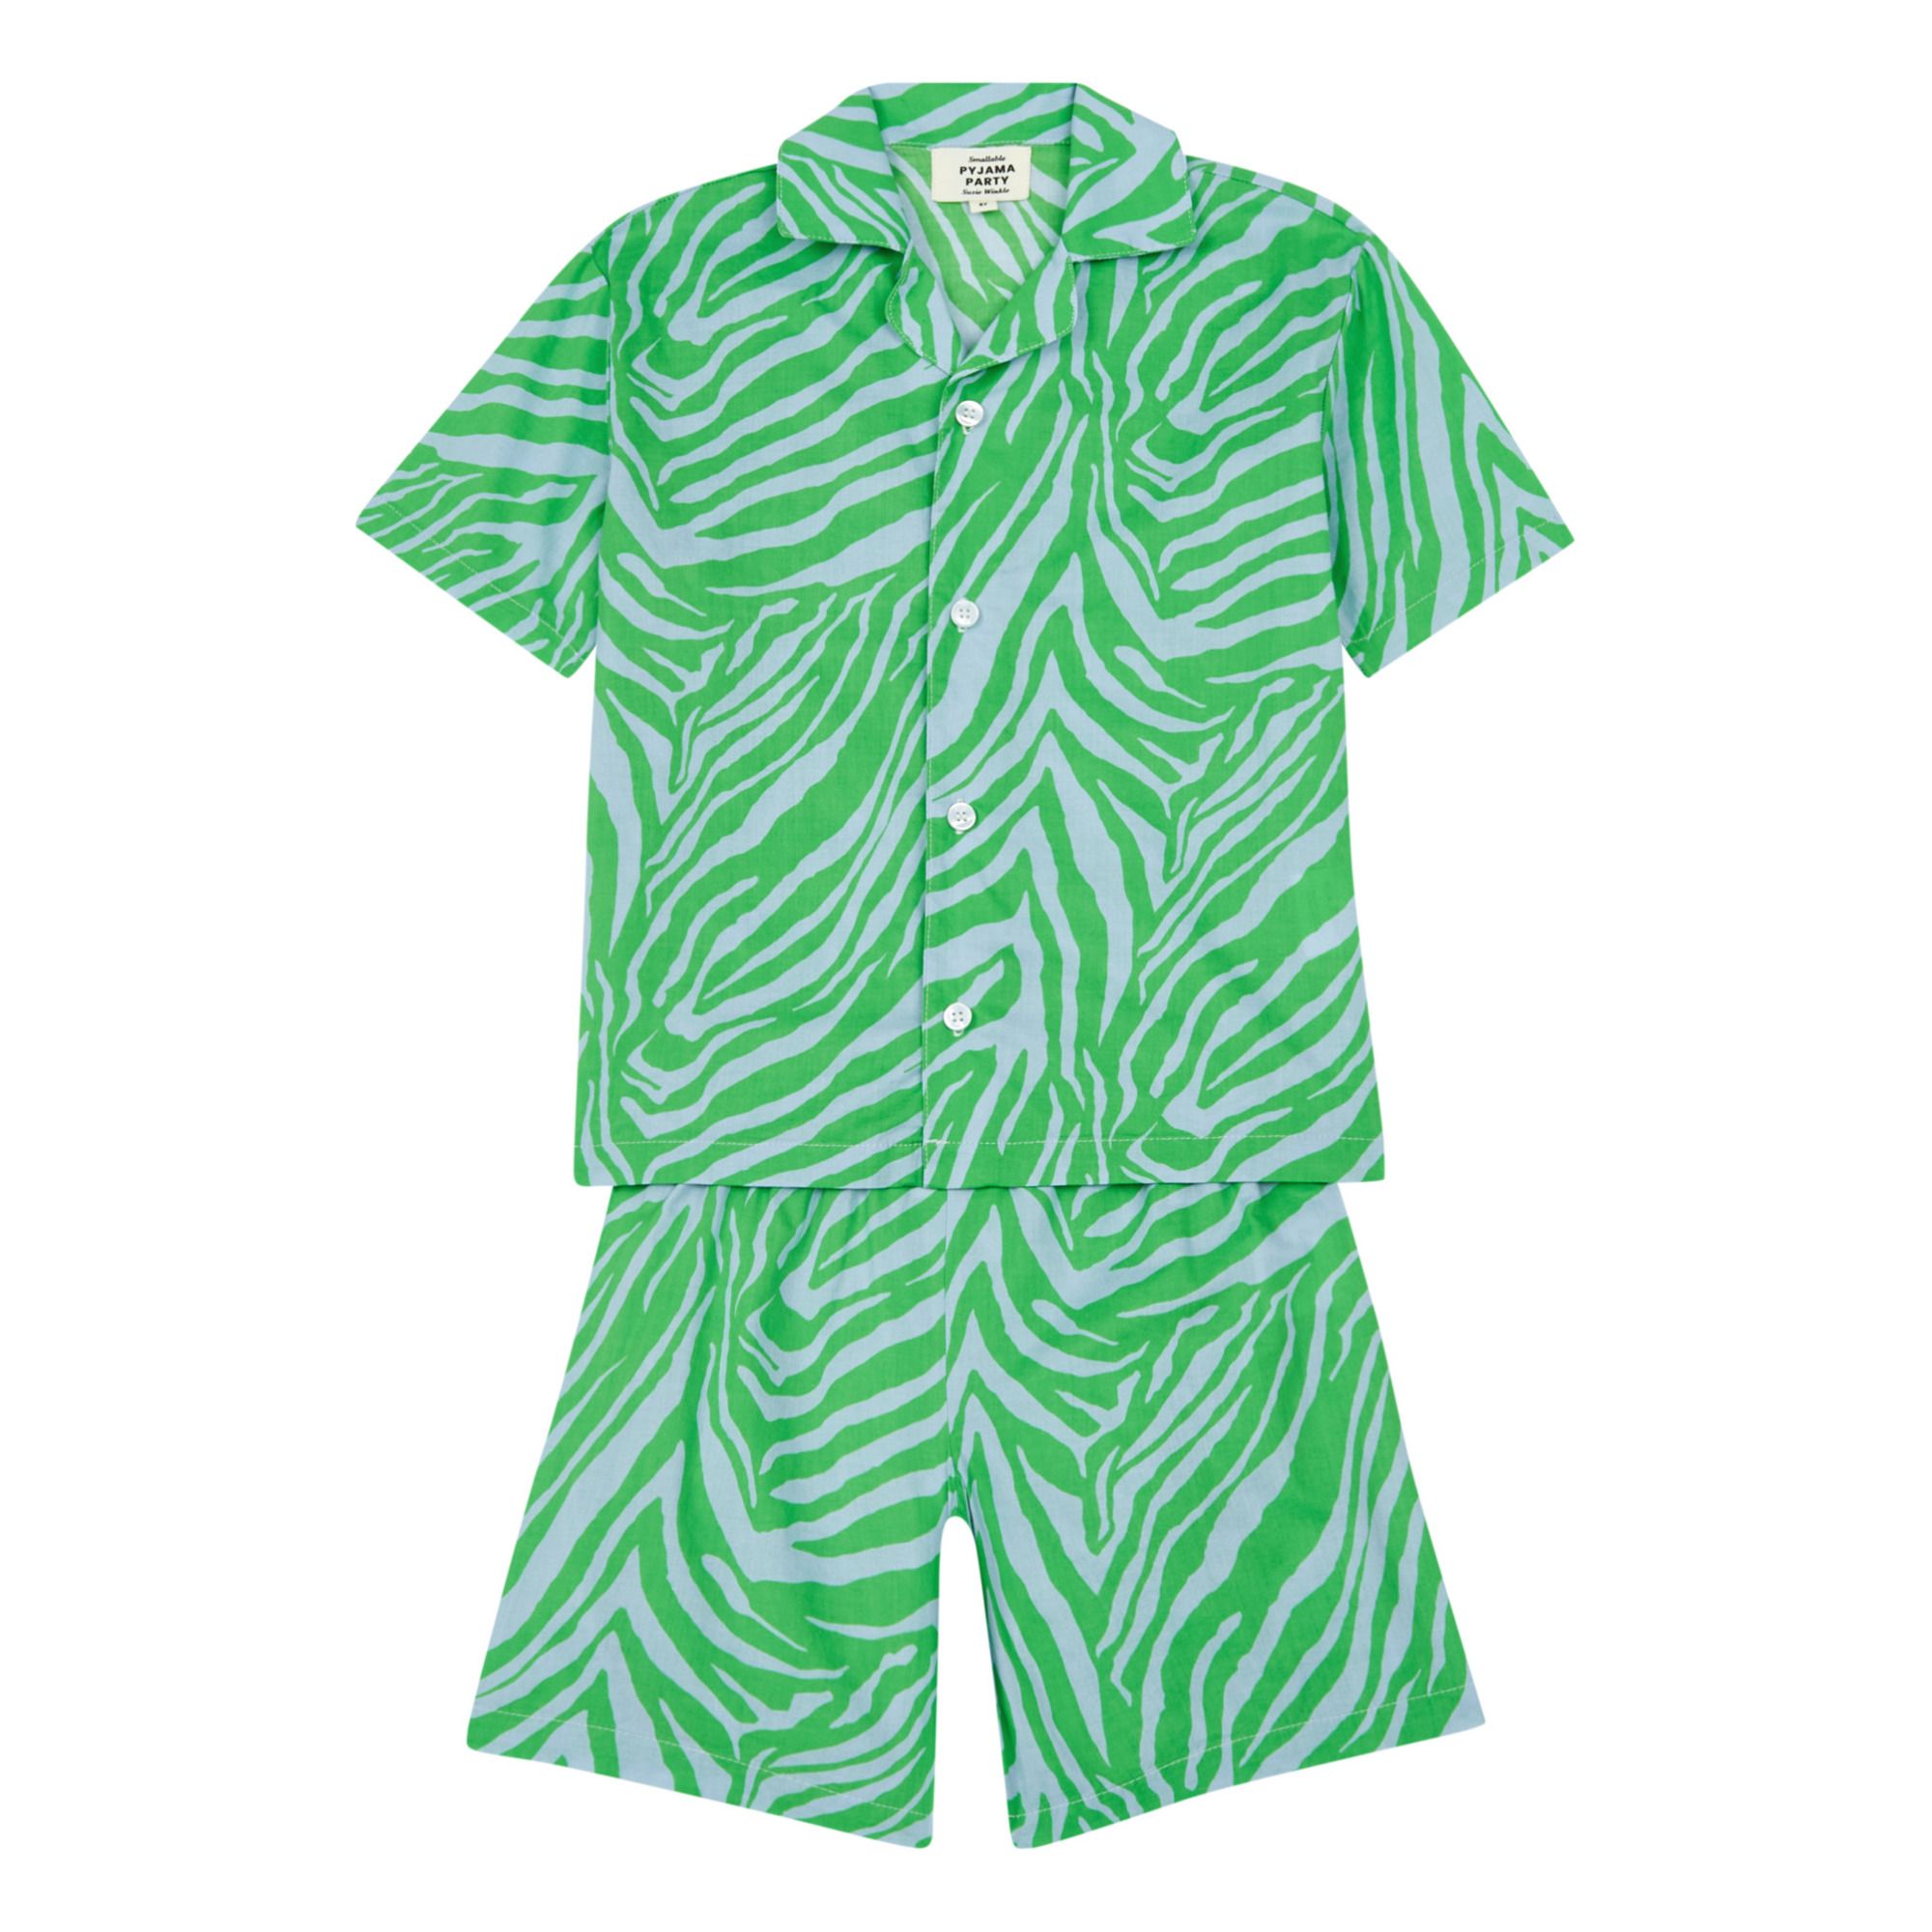 Suzie Winkle - Exclusivité Suzie Winkle x Smallable Pyjama Party – Pyjama Chemise + Short Swan - Garçon - Vert